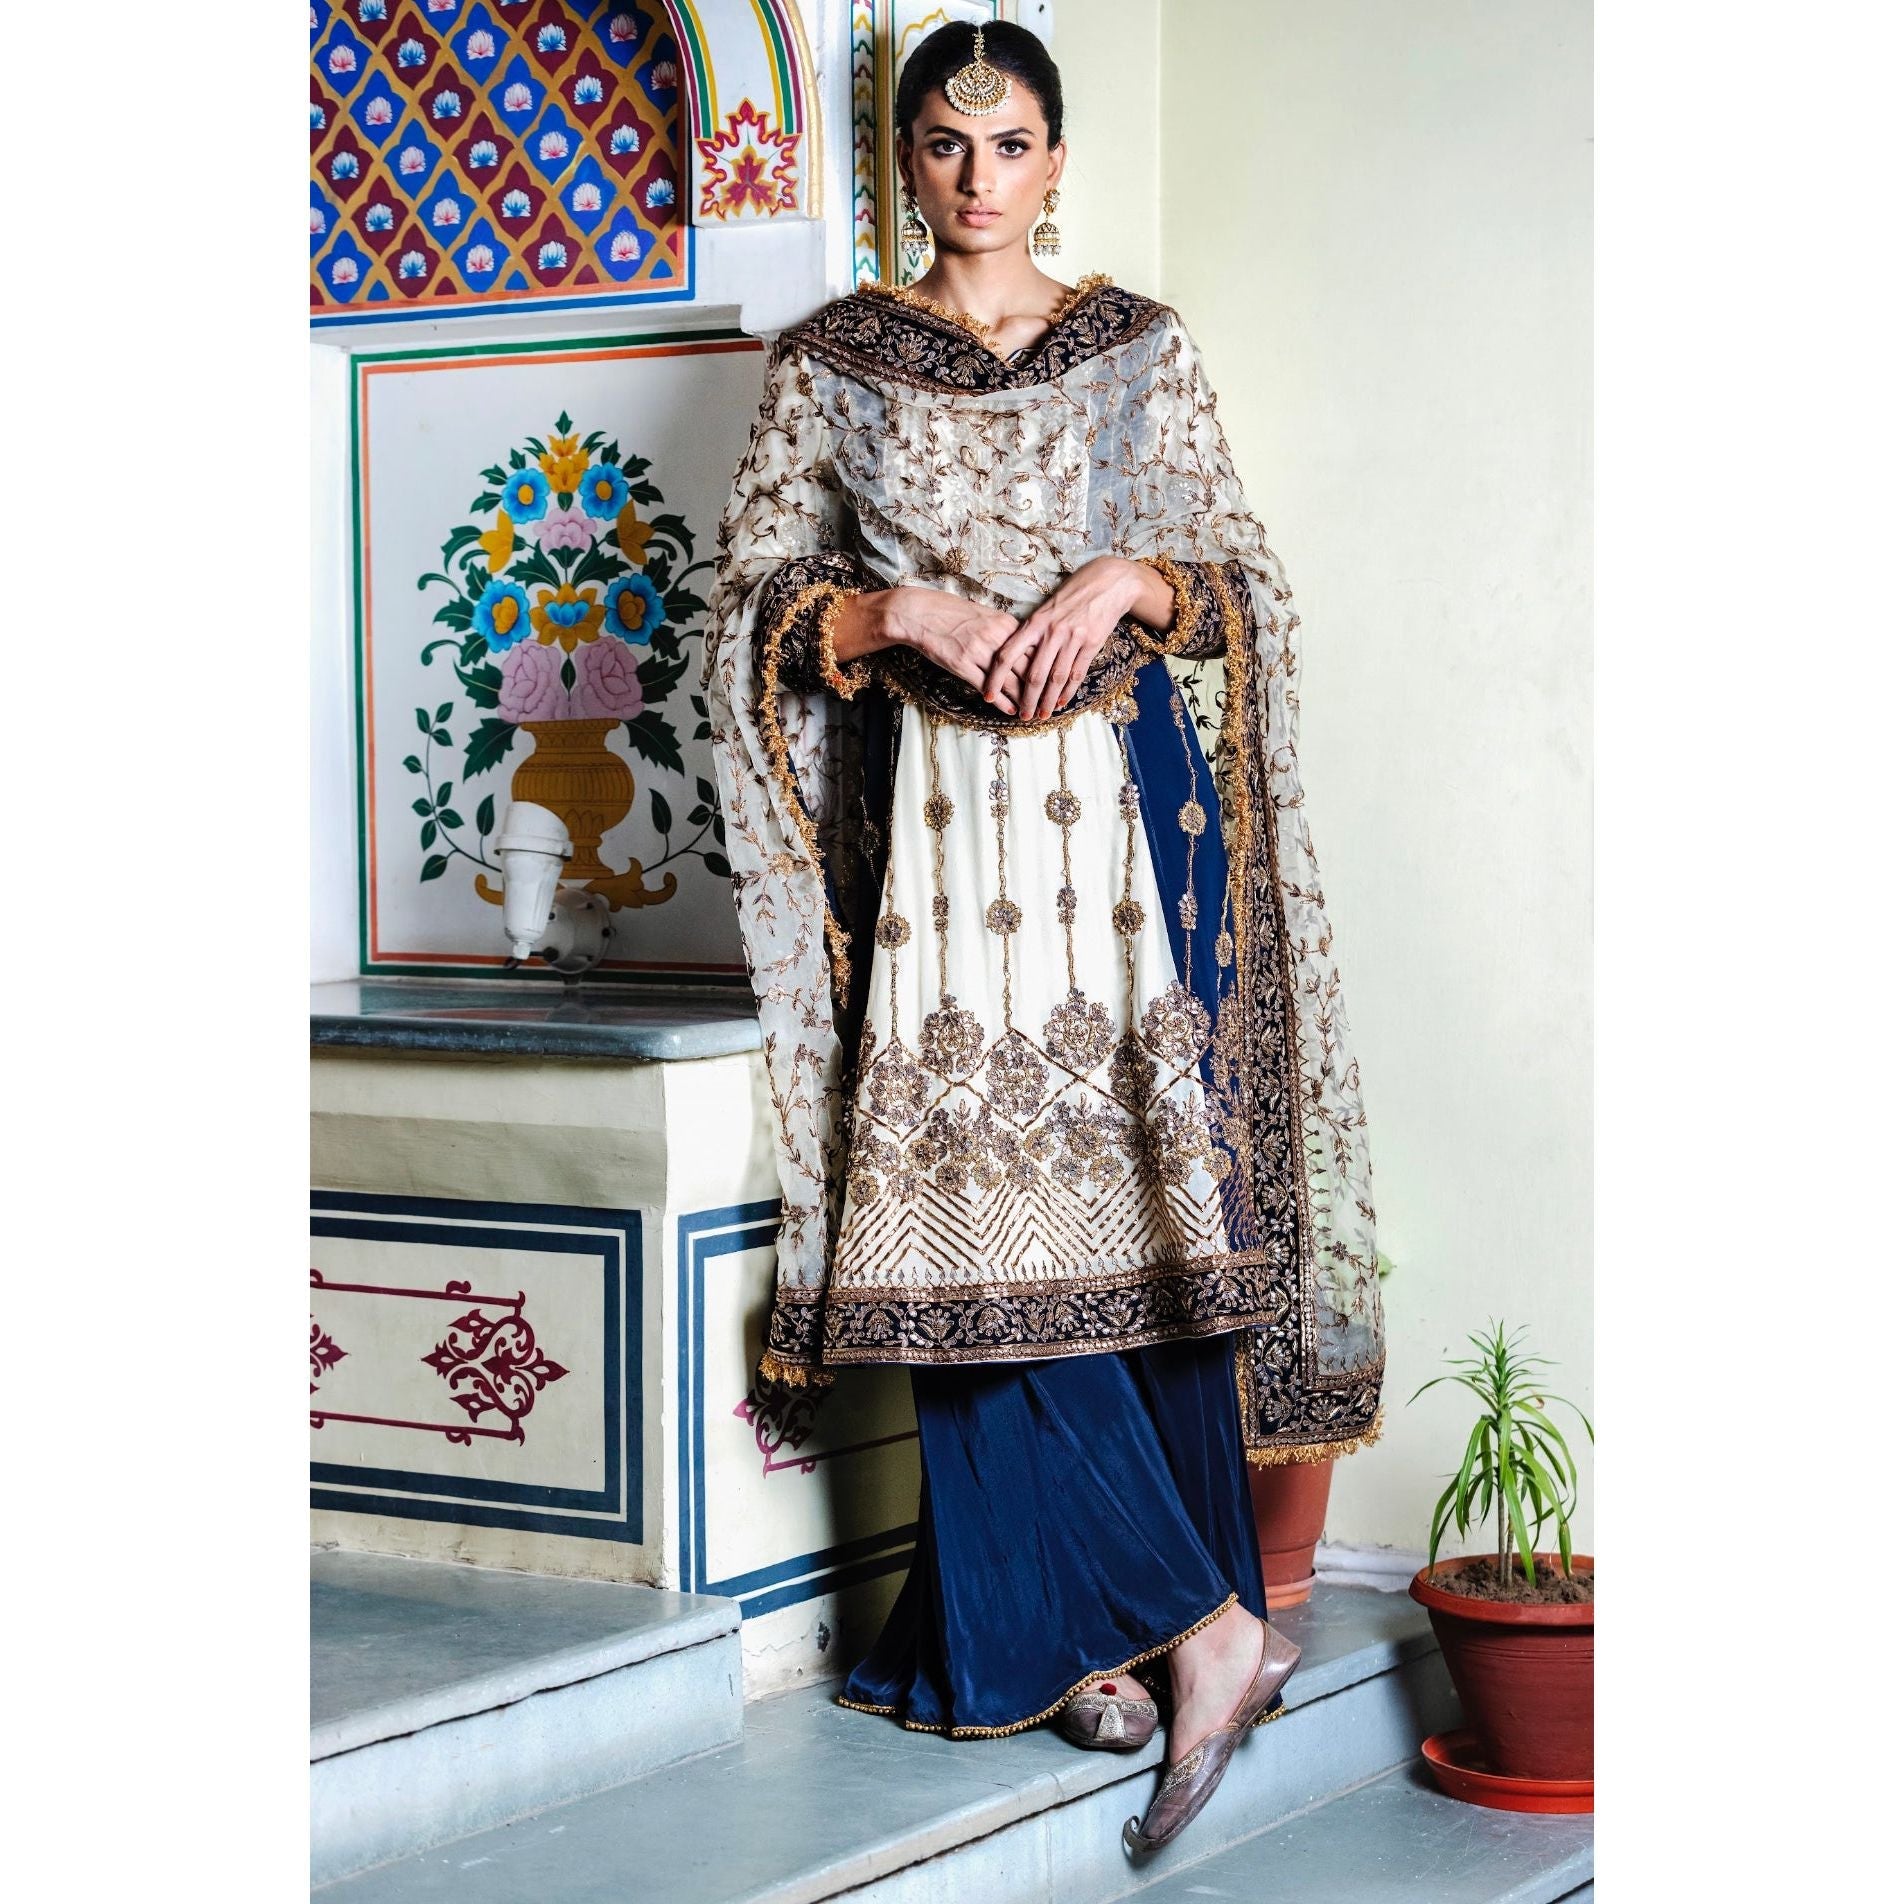 Ivory and Blue Embroidered Kurta Set - Indian Designer Bridal Wedding Outfit